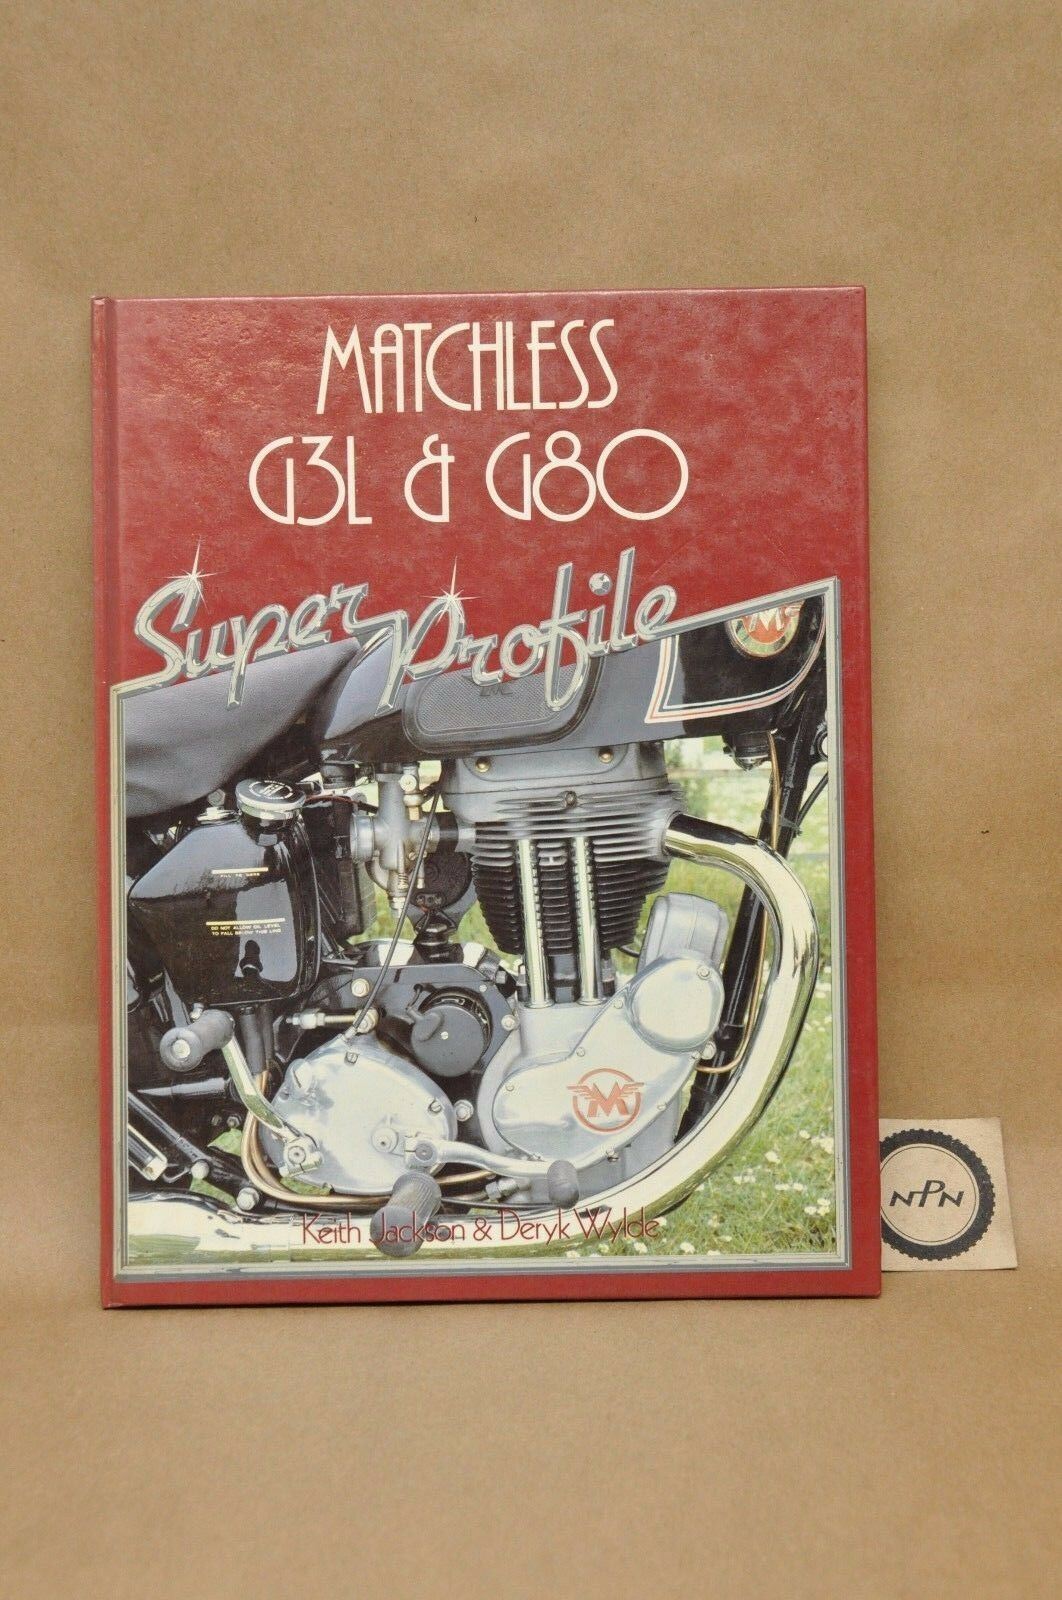 Vtg 1984 Matchless G3L G80 Haynes Super Profile History Book by Jackson & Wylde 